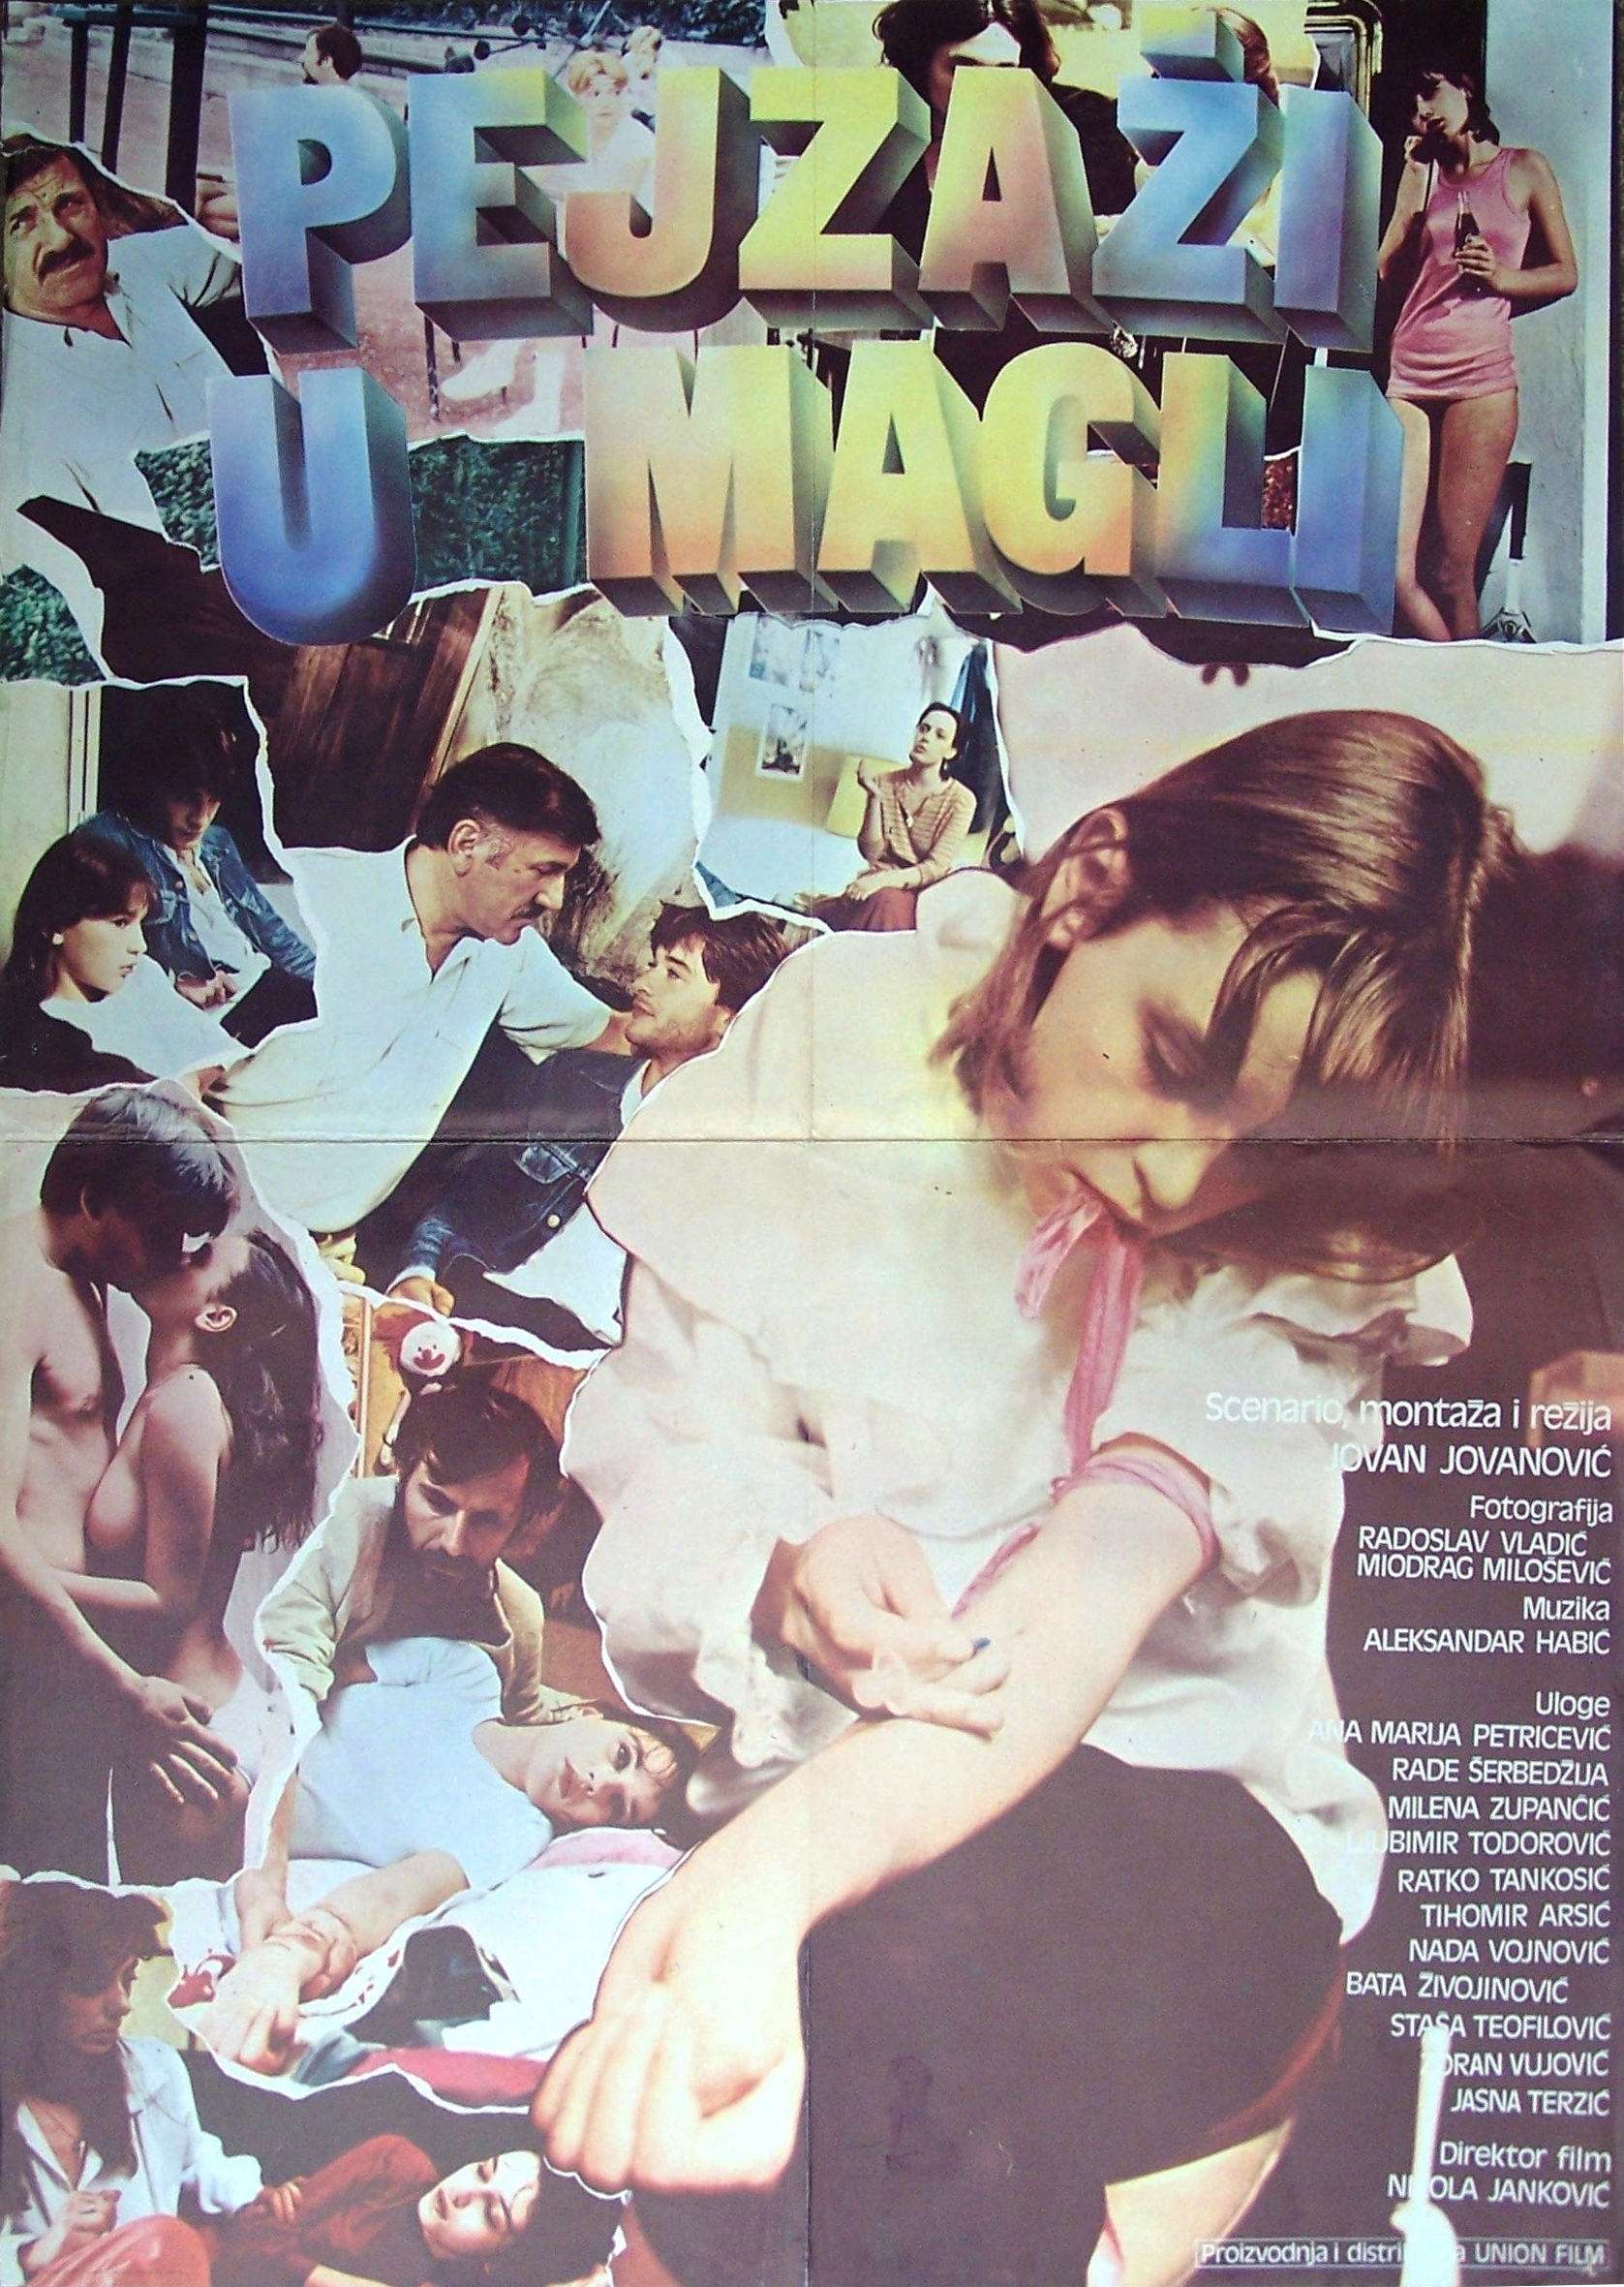 Pejzazi u magli (1984) Screenshot 2